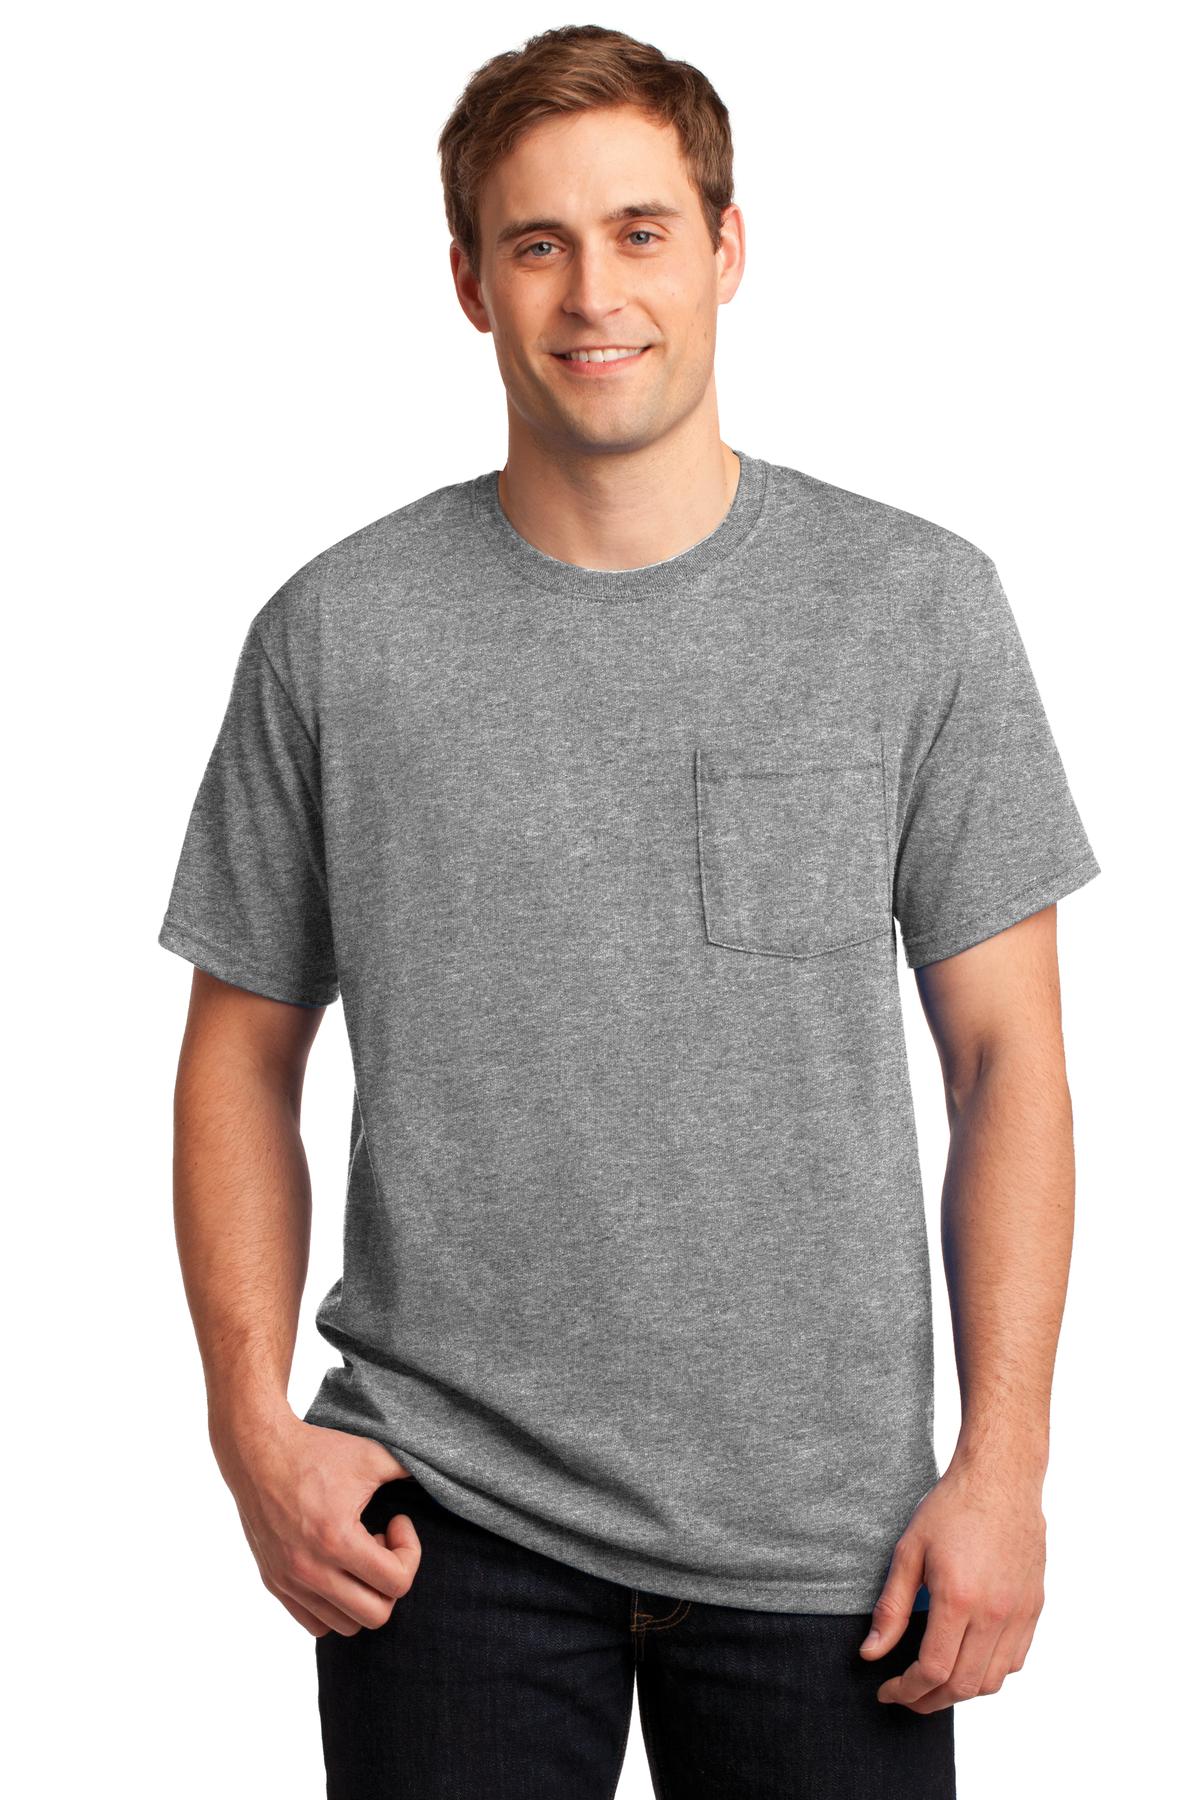 JERZEES® - Dri-Power® 50/50 Cotton/Poly Pocket T-Shirt. 29MP [Oxford] - DFW Impression